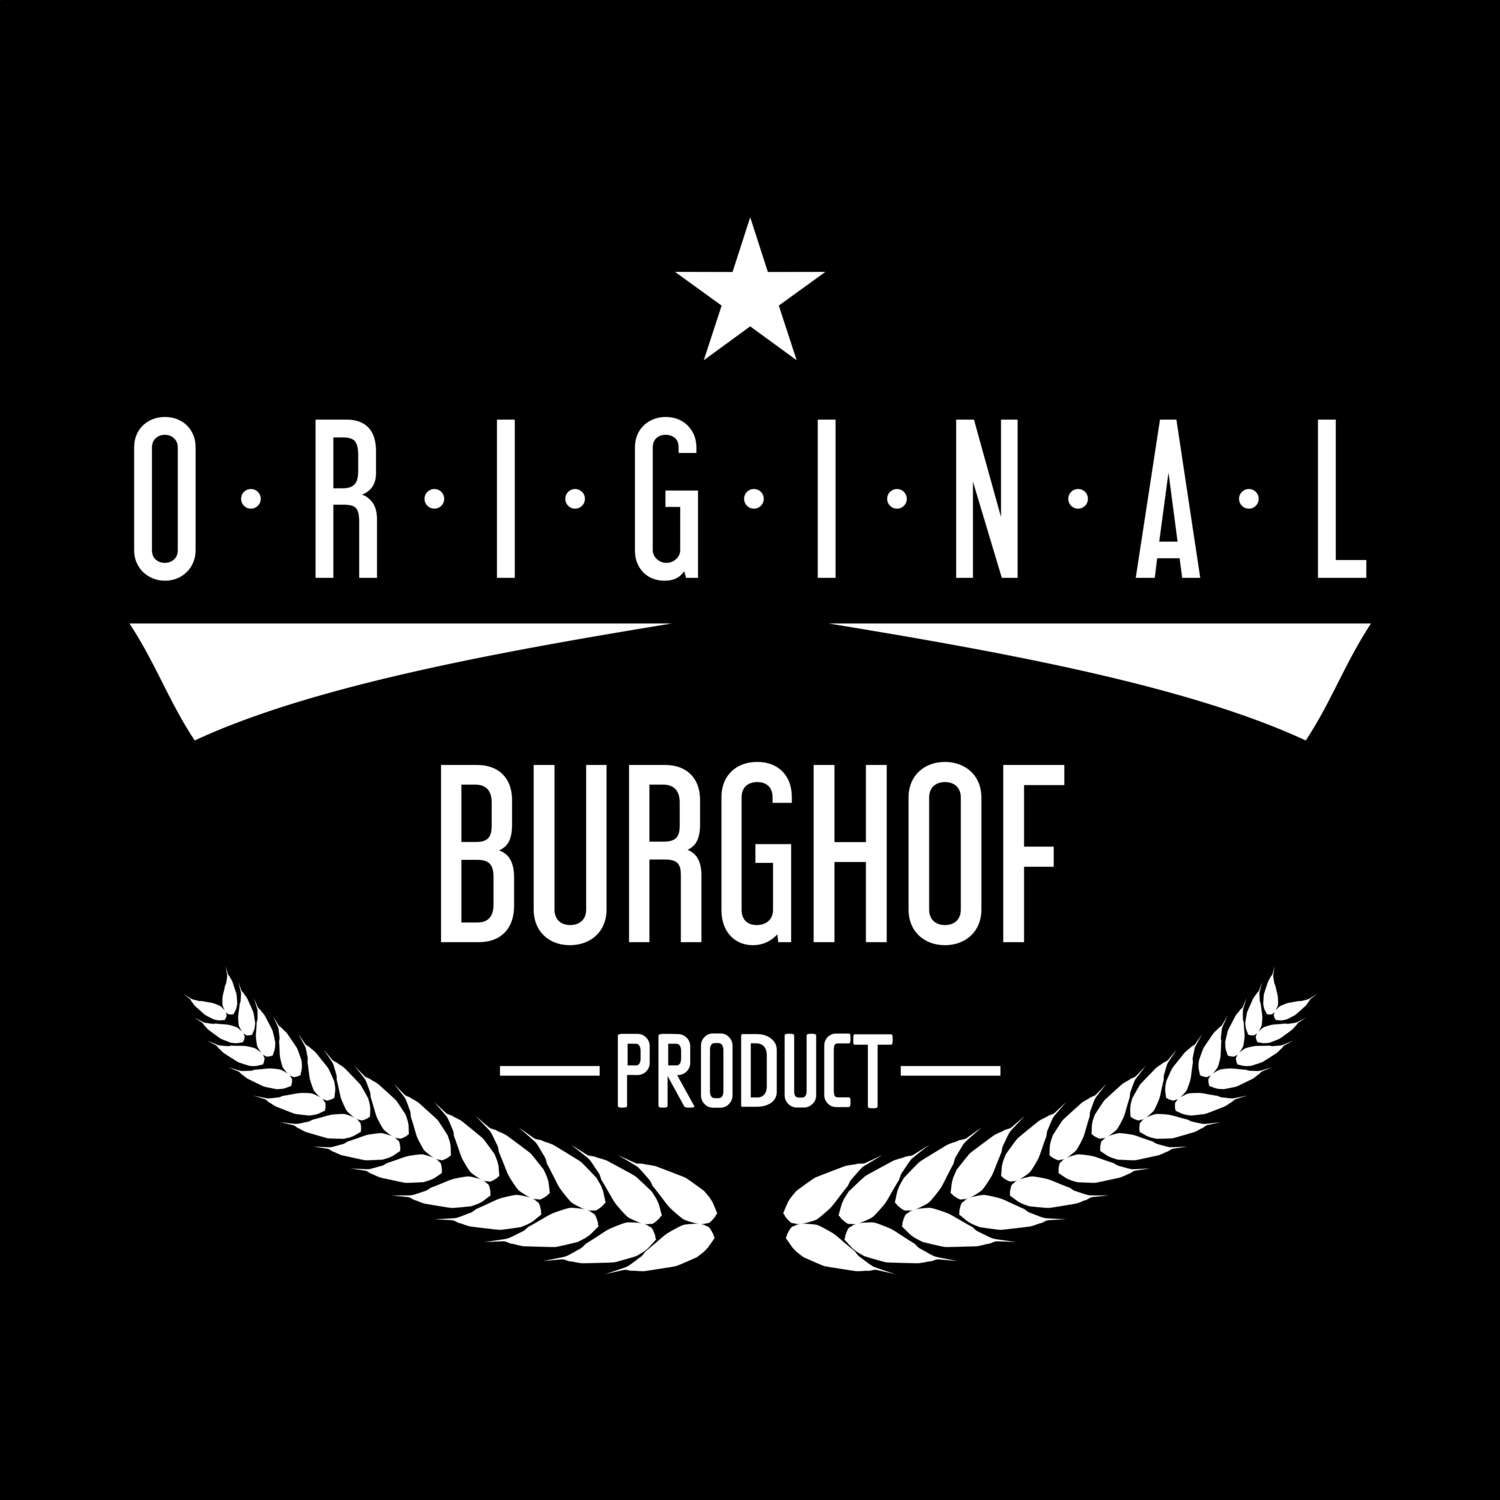 Burghof T-Shirt »Original Product«